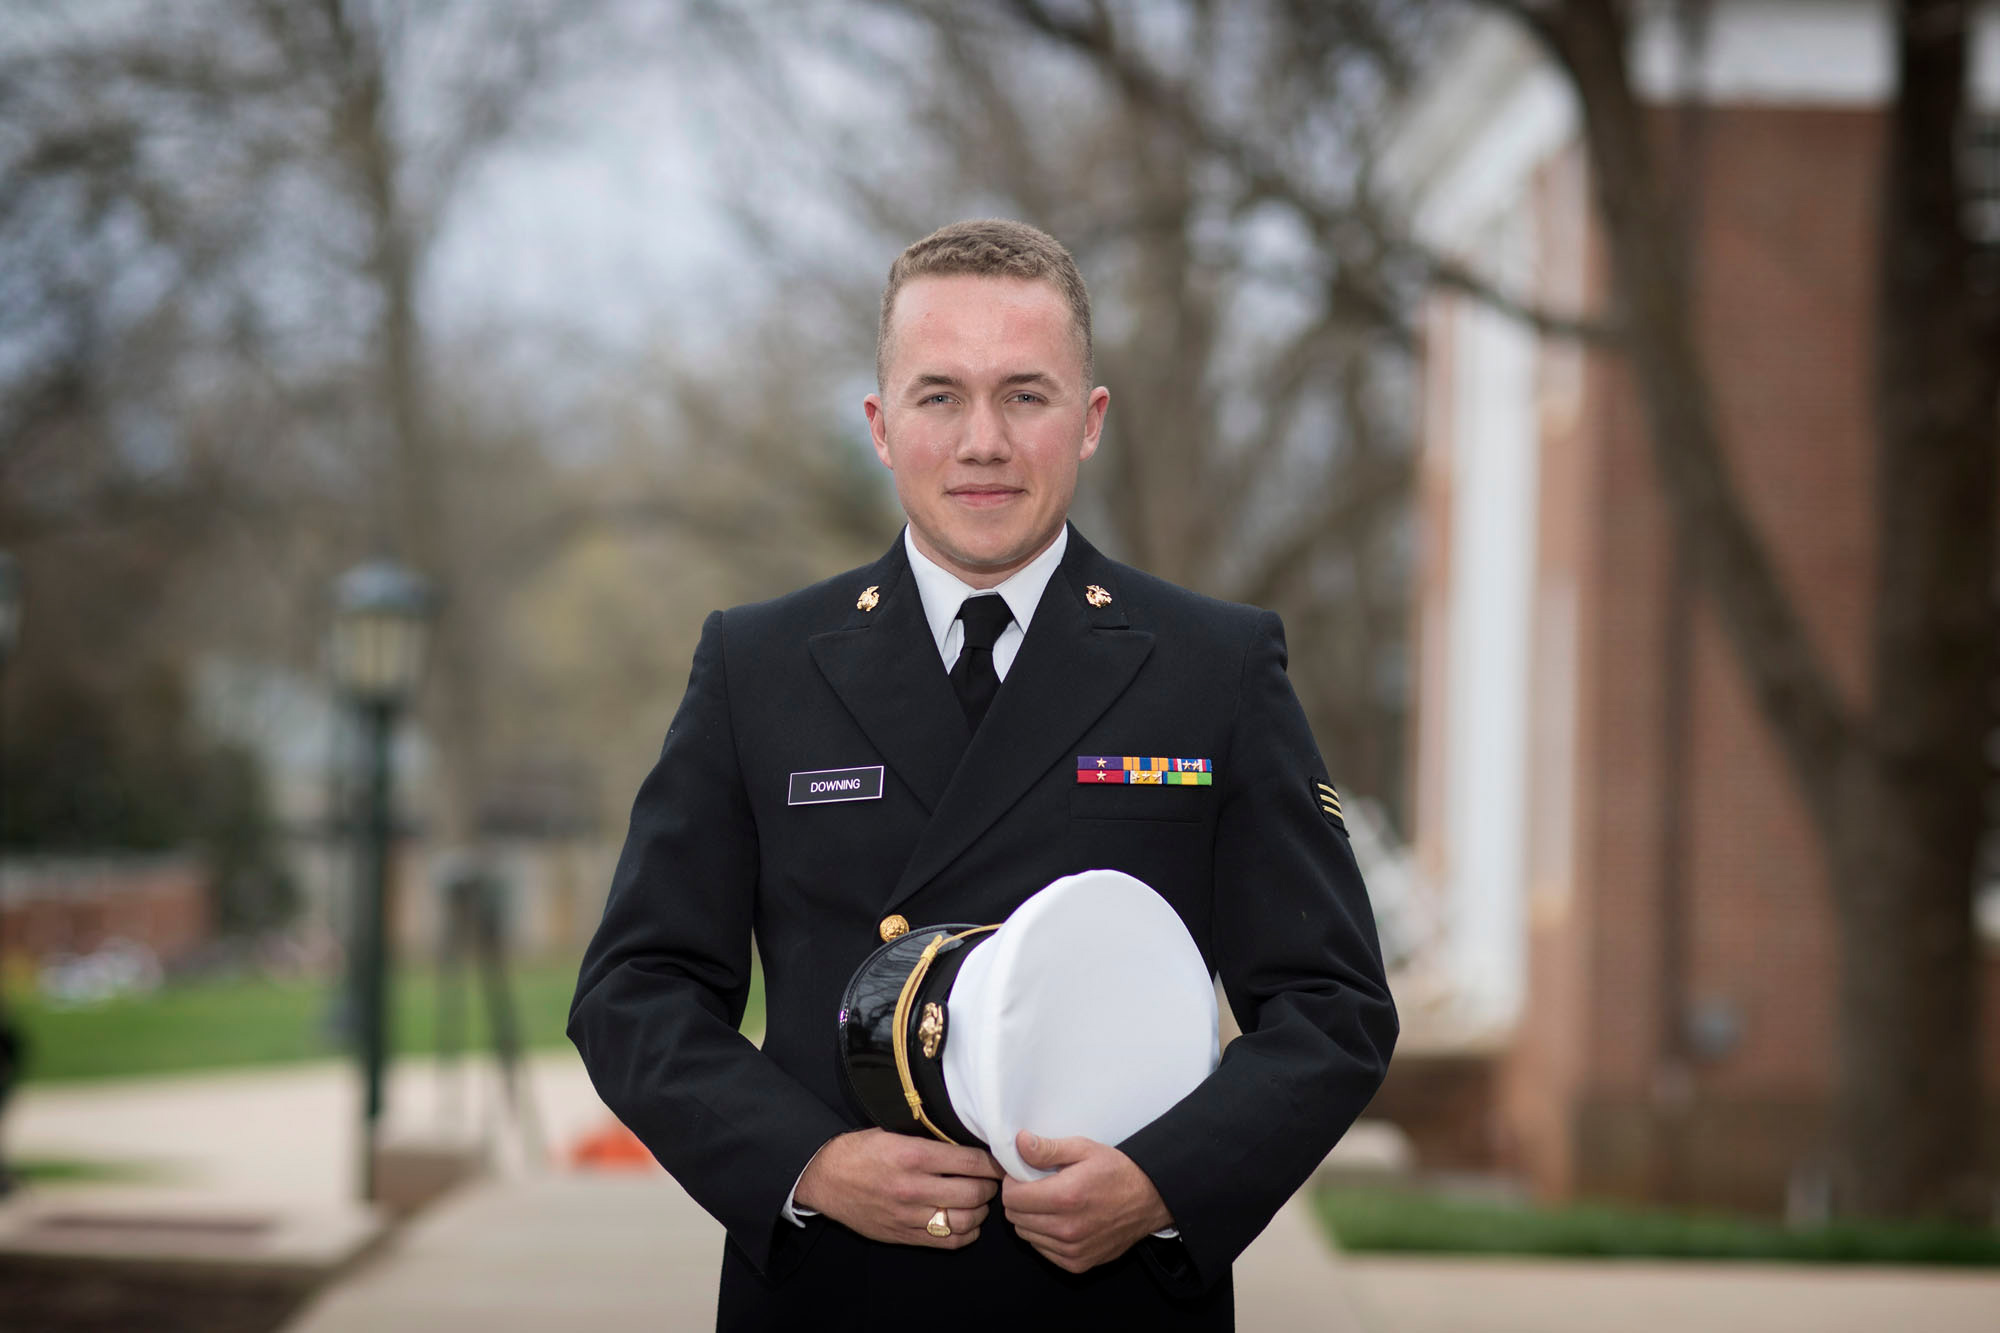 Portrait of U.S. Marine Capt. Michael Downing in formal Marine attire